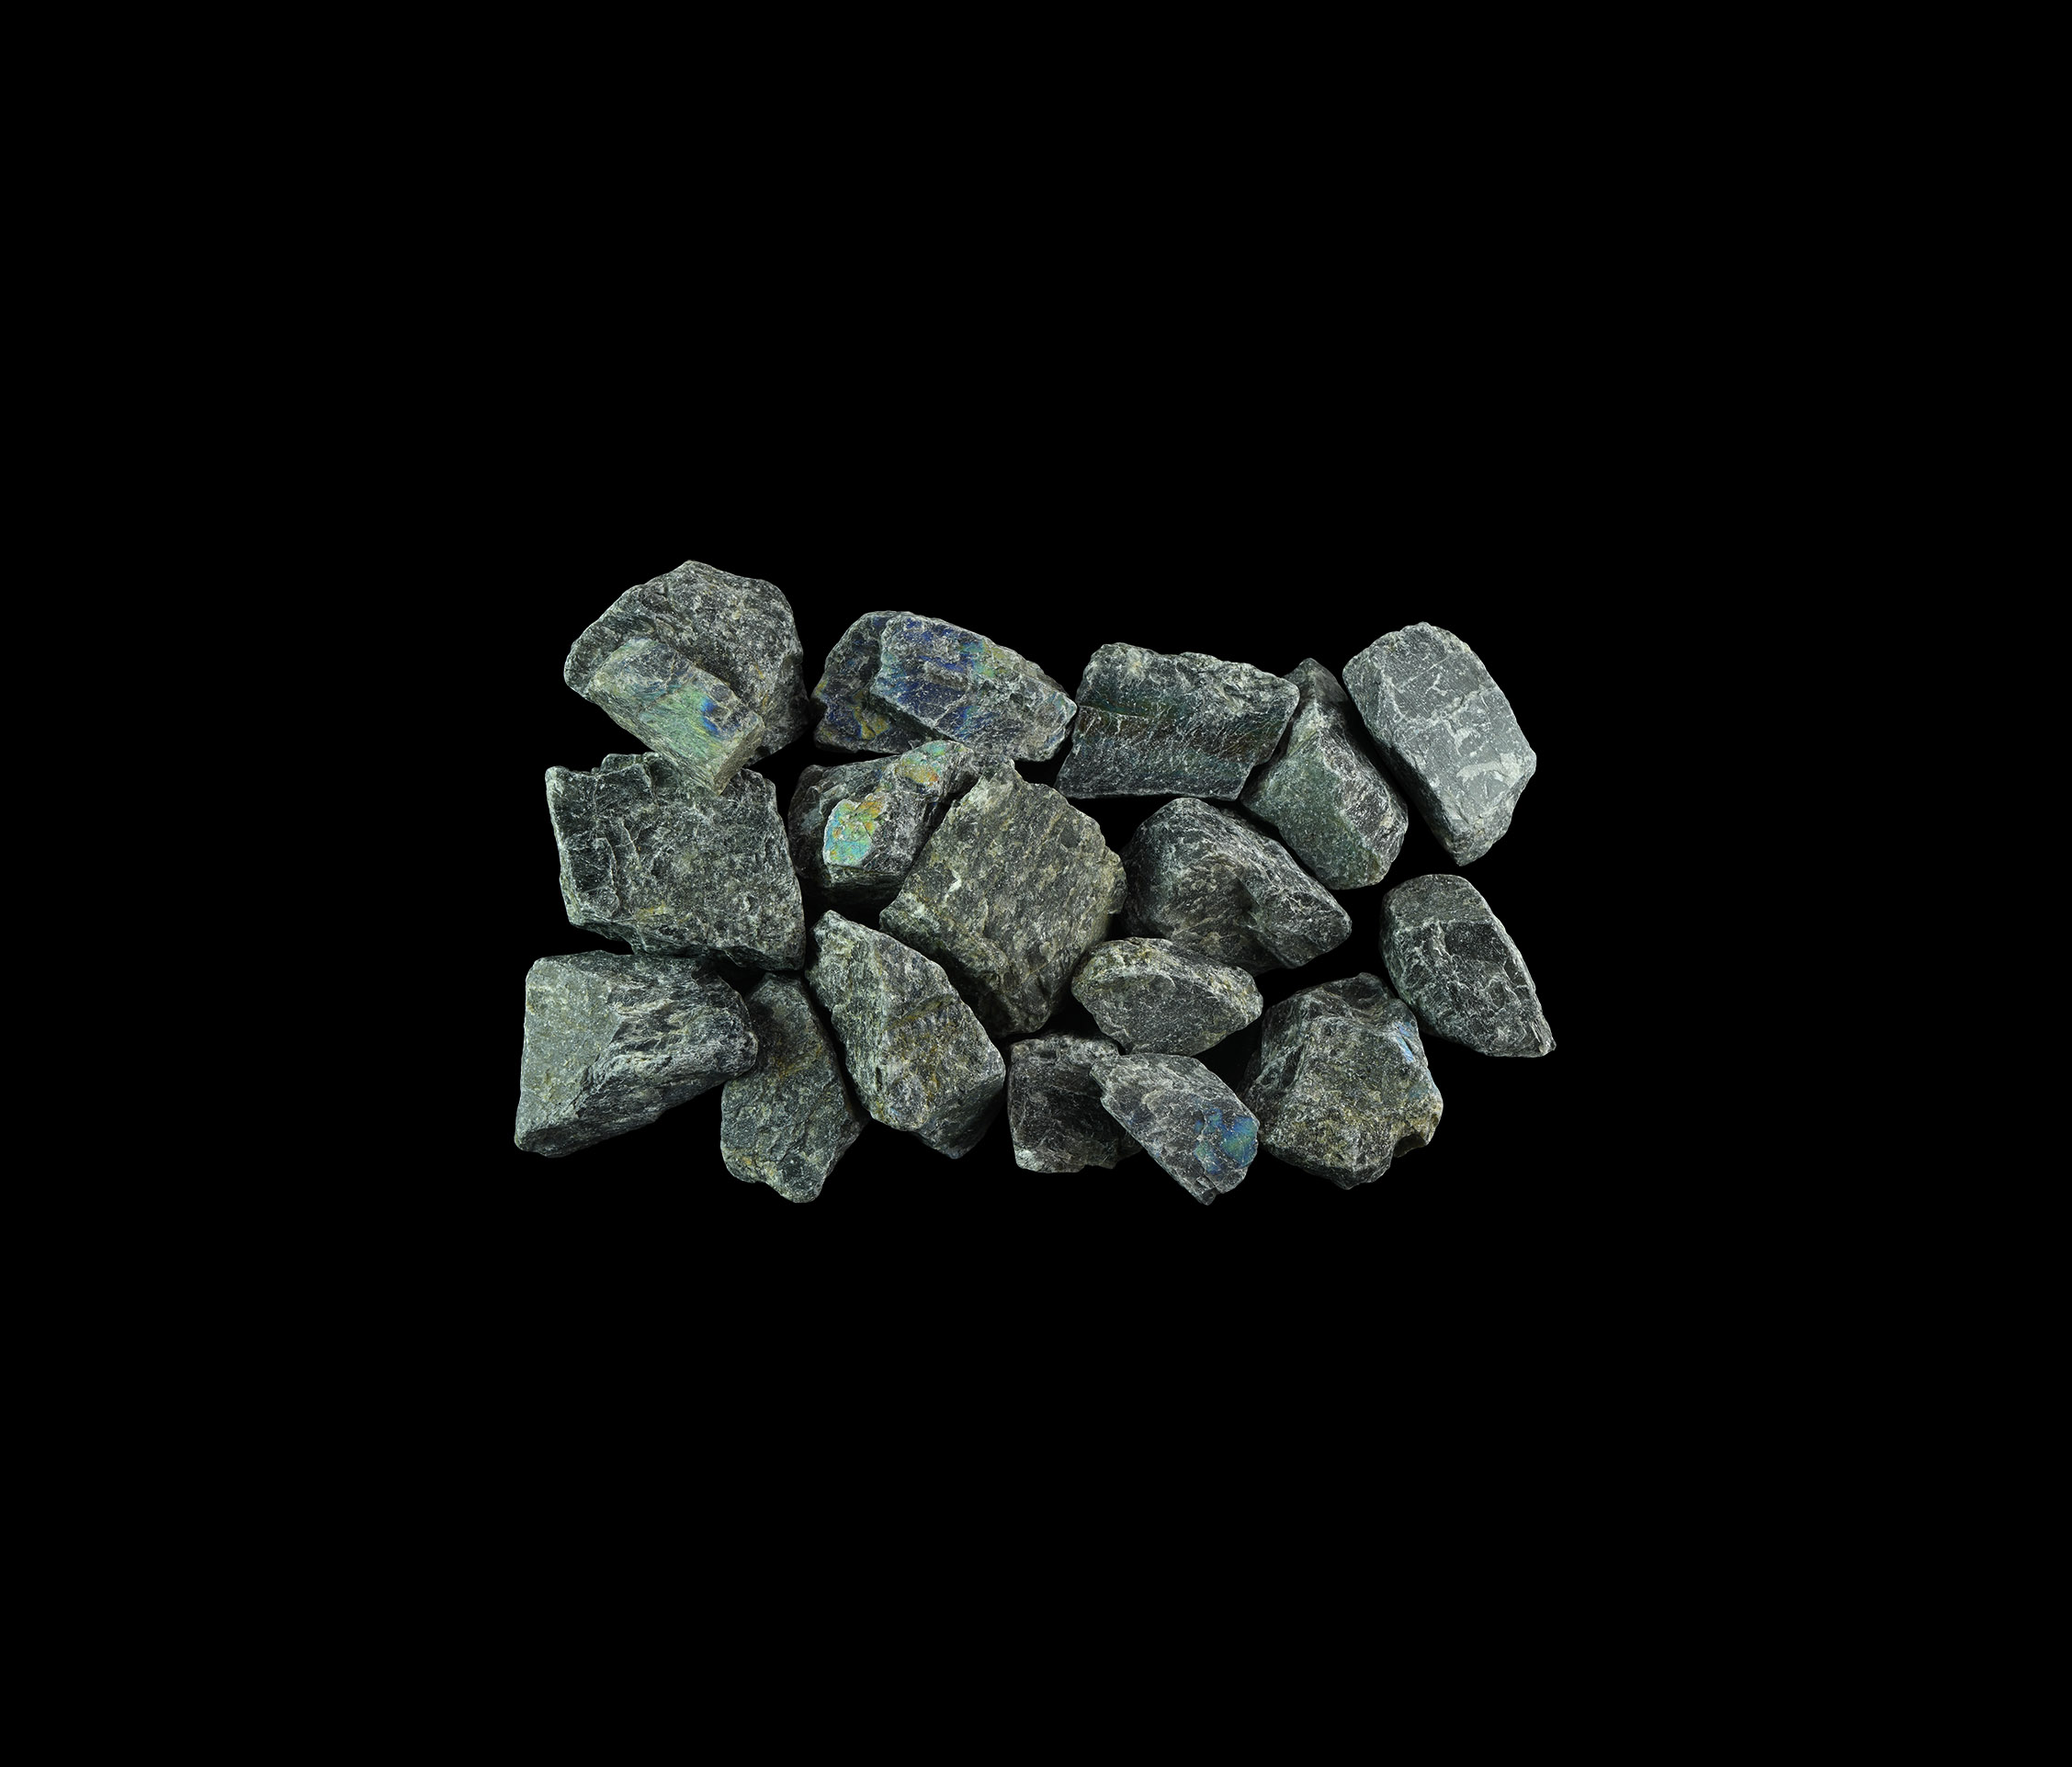 Natural History - 18 Labradorite Mineral Specimens